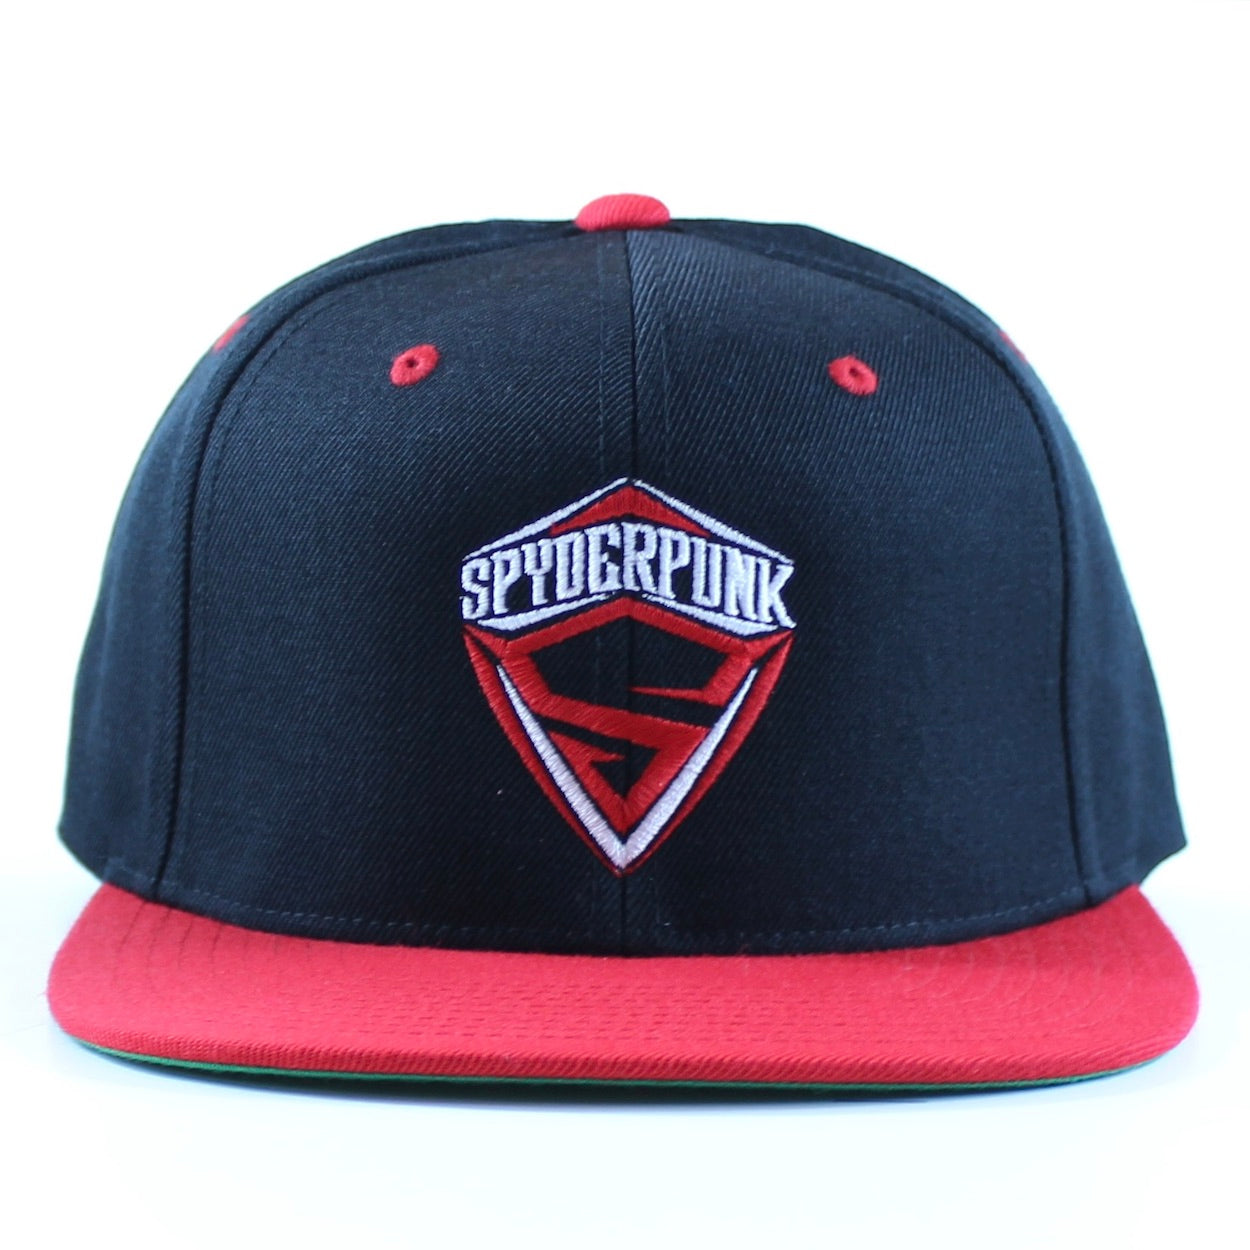 Spyderpunk Logo Snapback